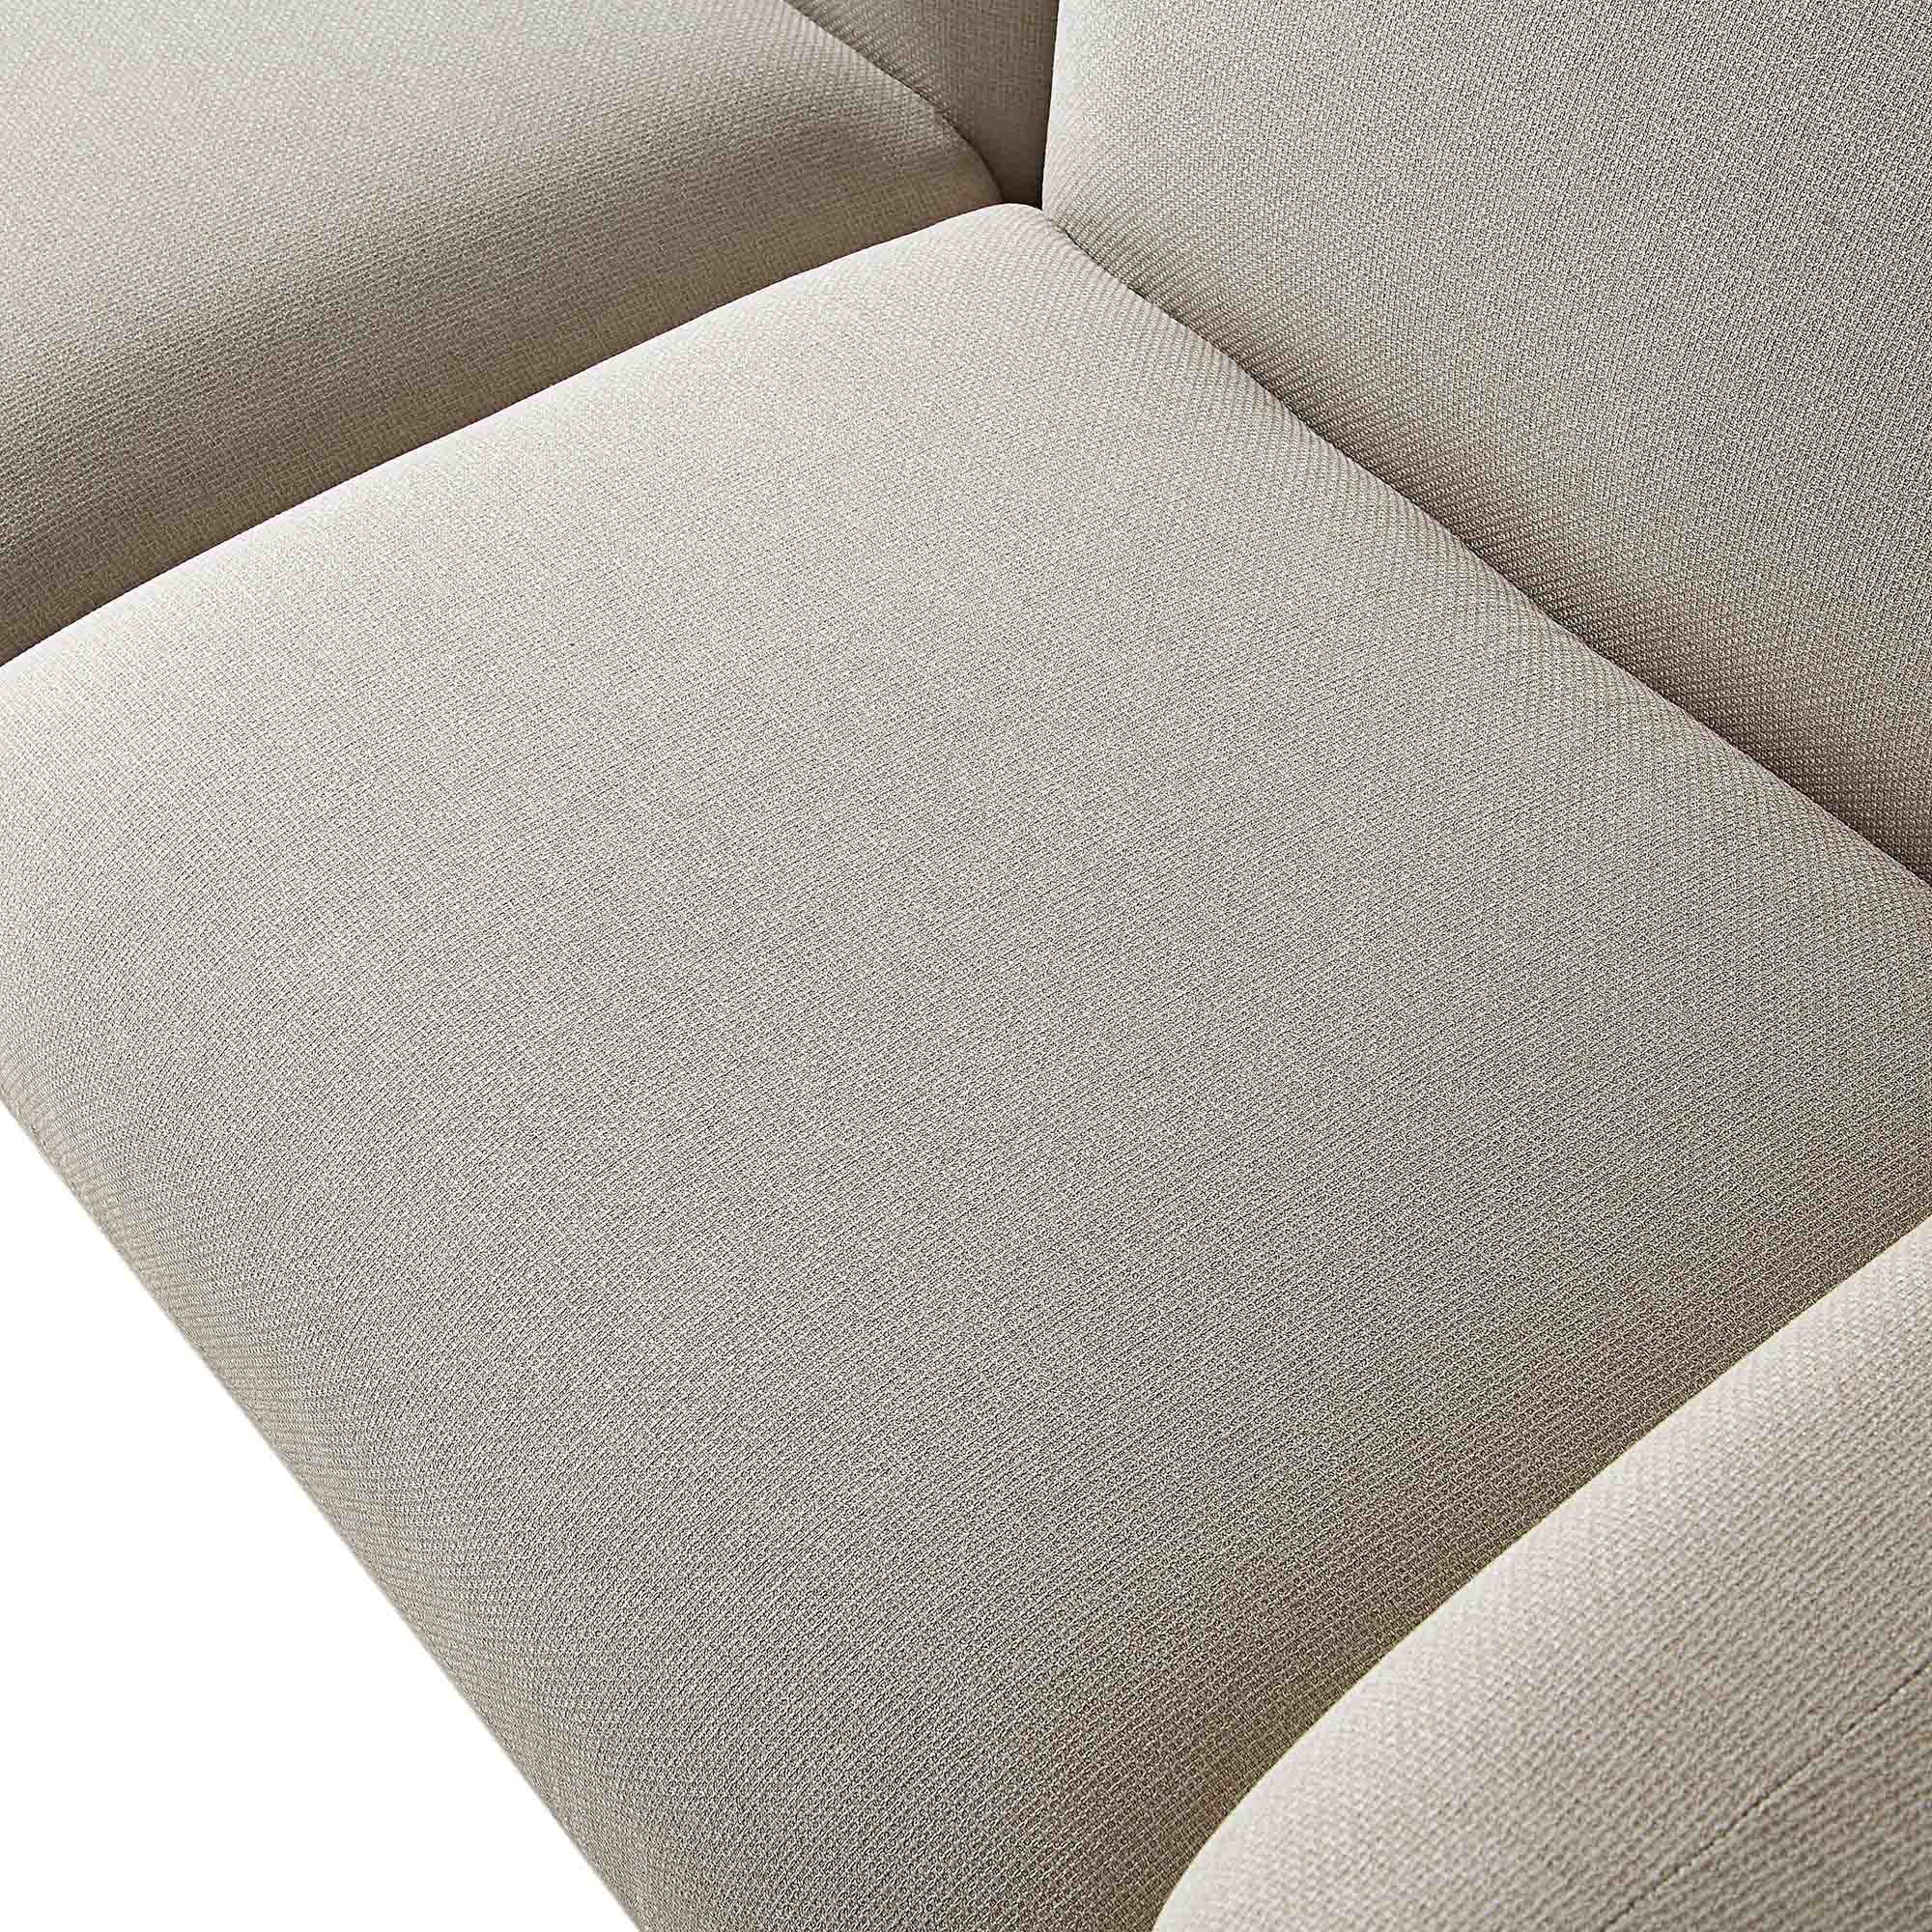 Gianni Three Seater Sofa, Beige Woven Fabric